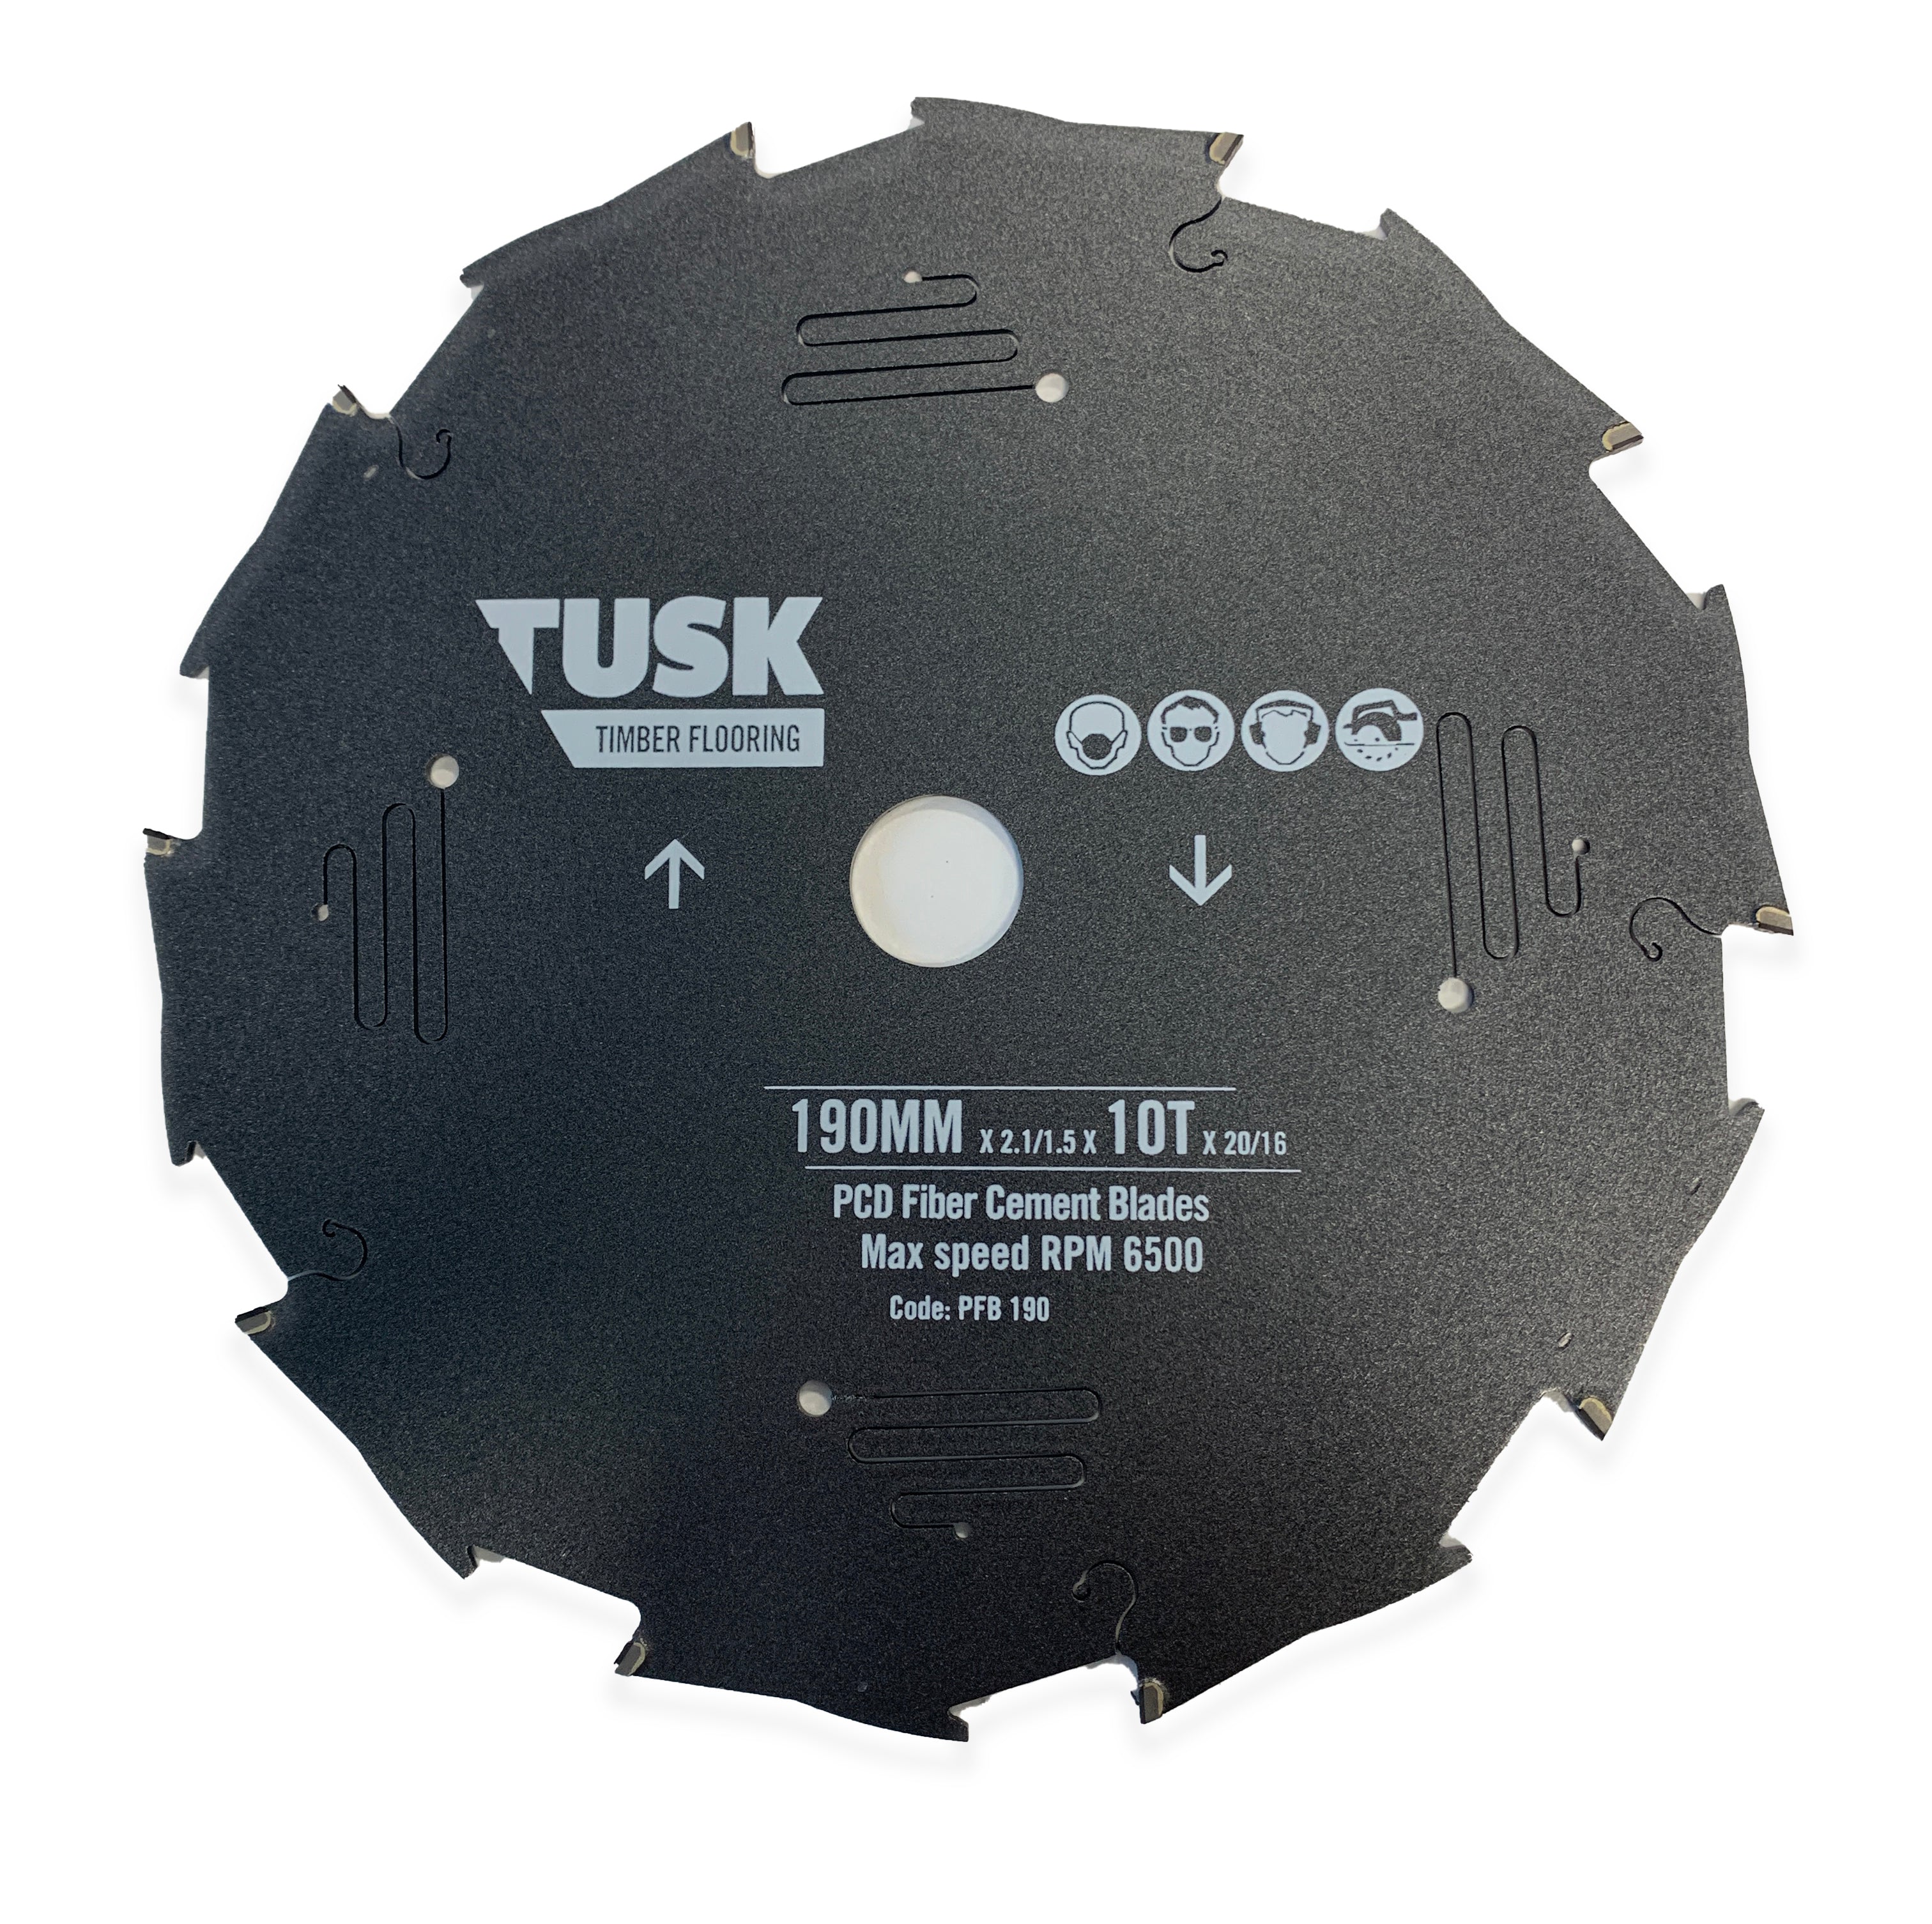 Tusk Pcd Flooring Blade - 190 X 2.1 X 10T X 20(16)